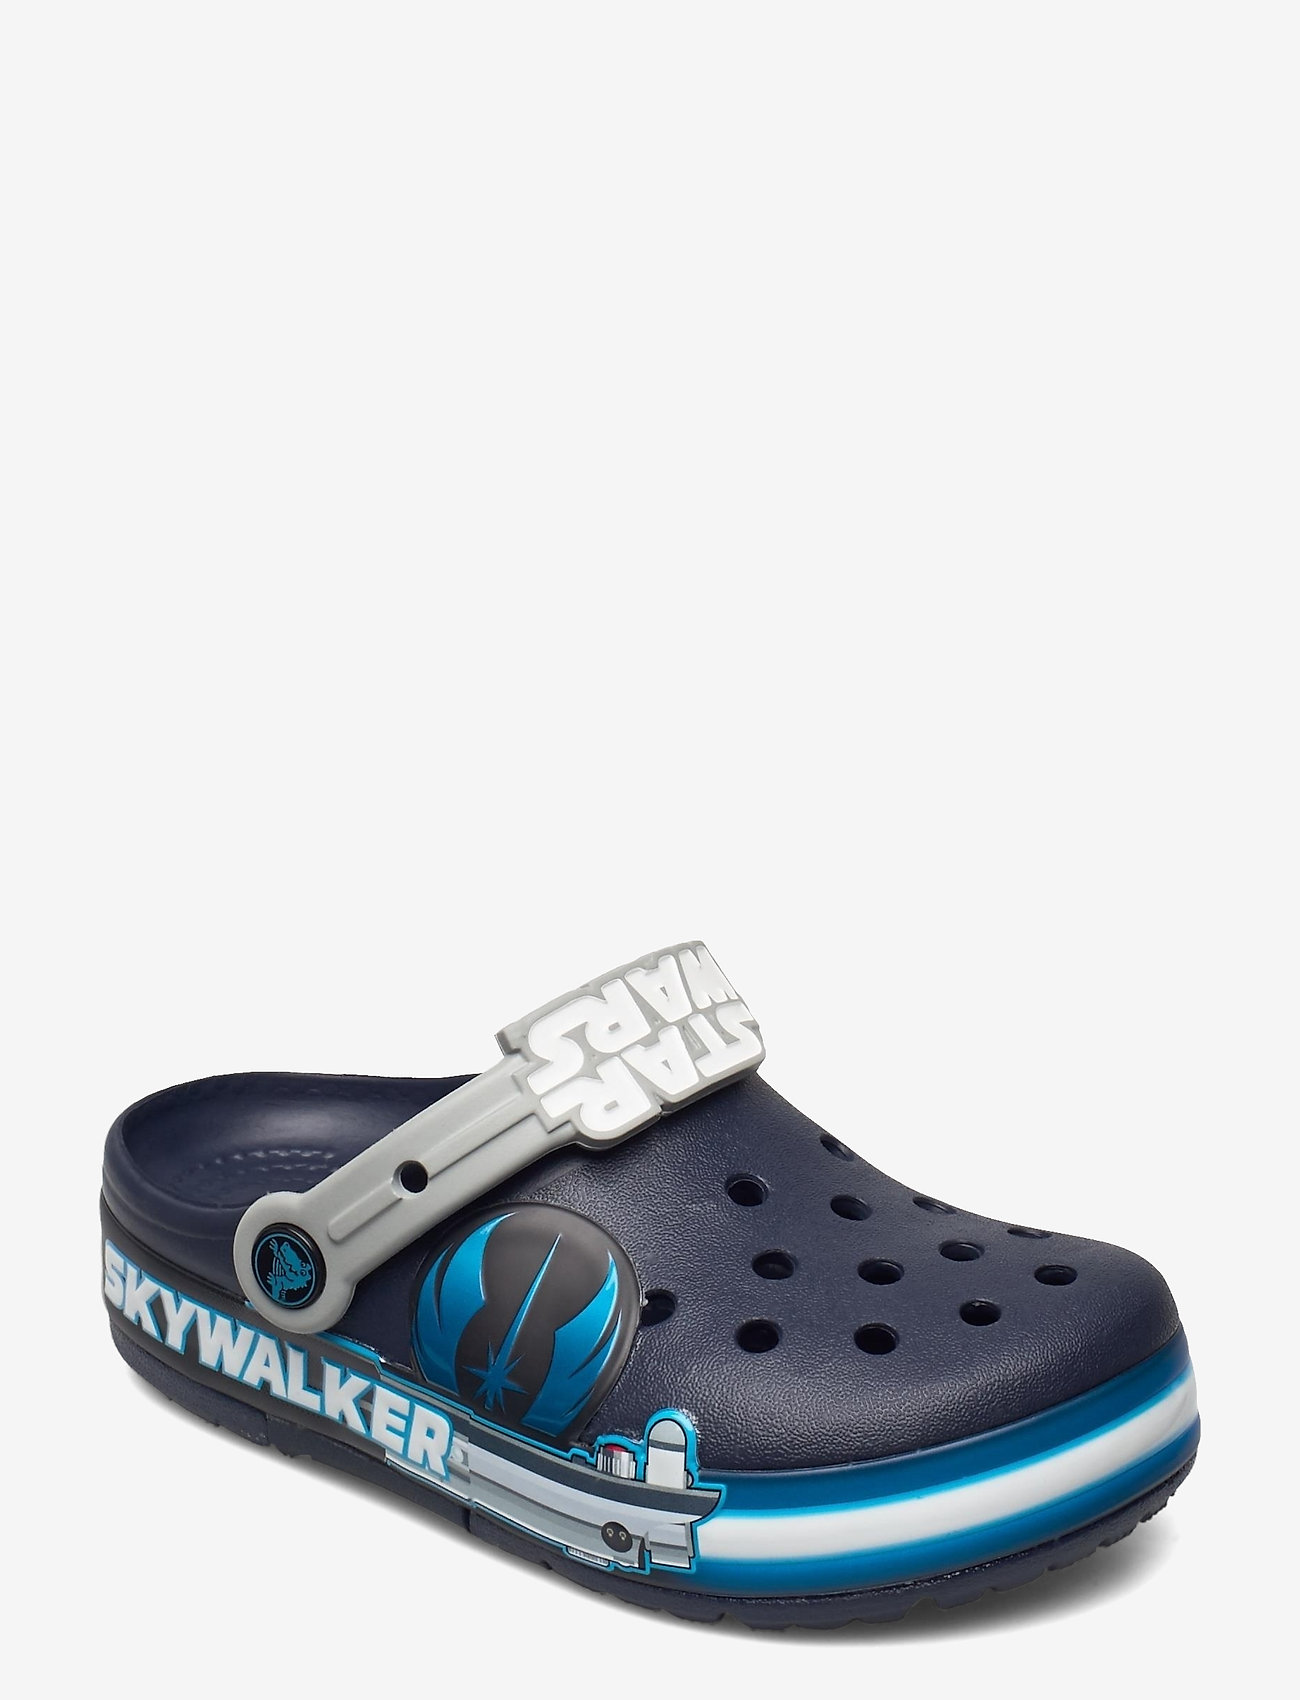 crocs skywalker